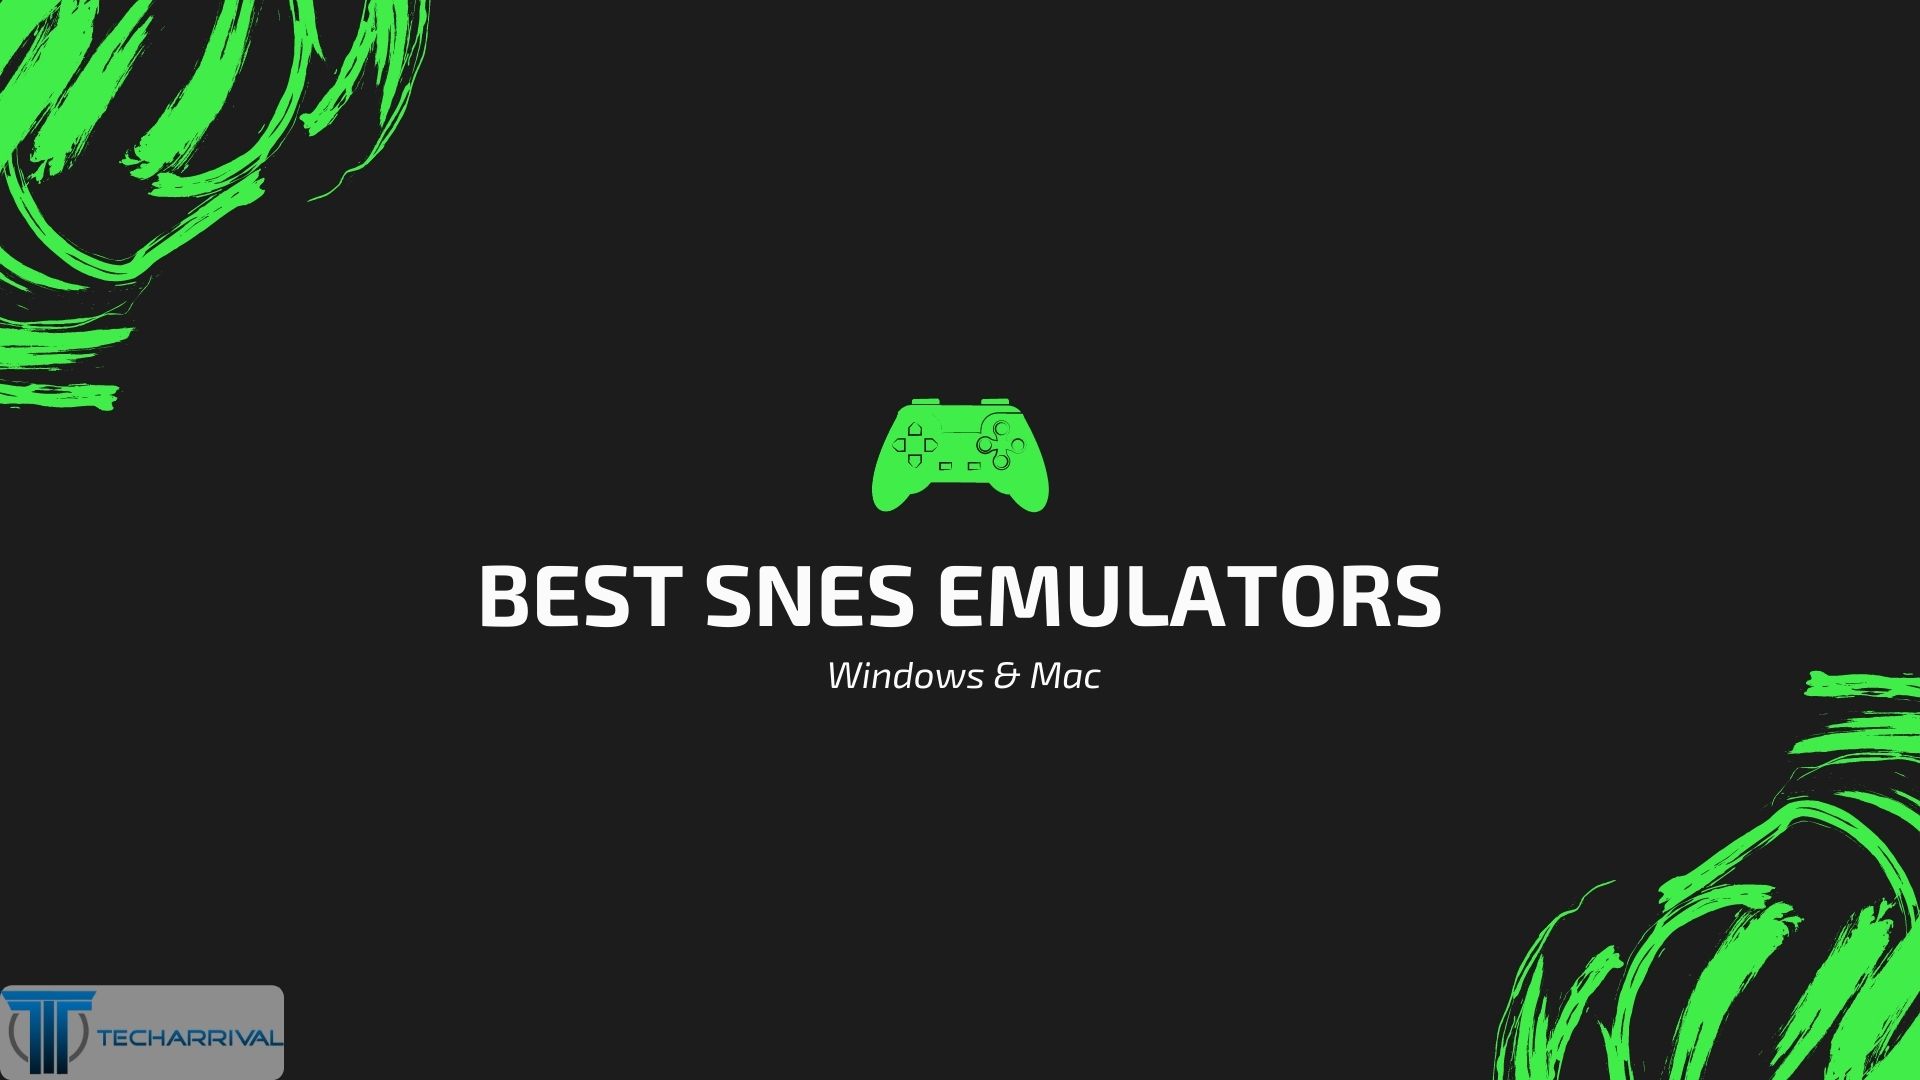 snes emulators for windows